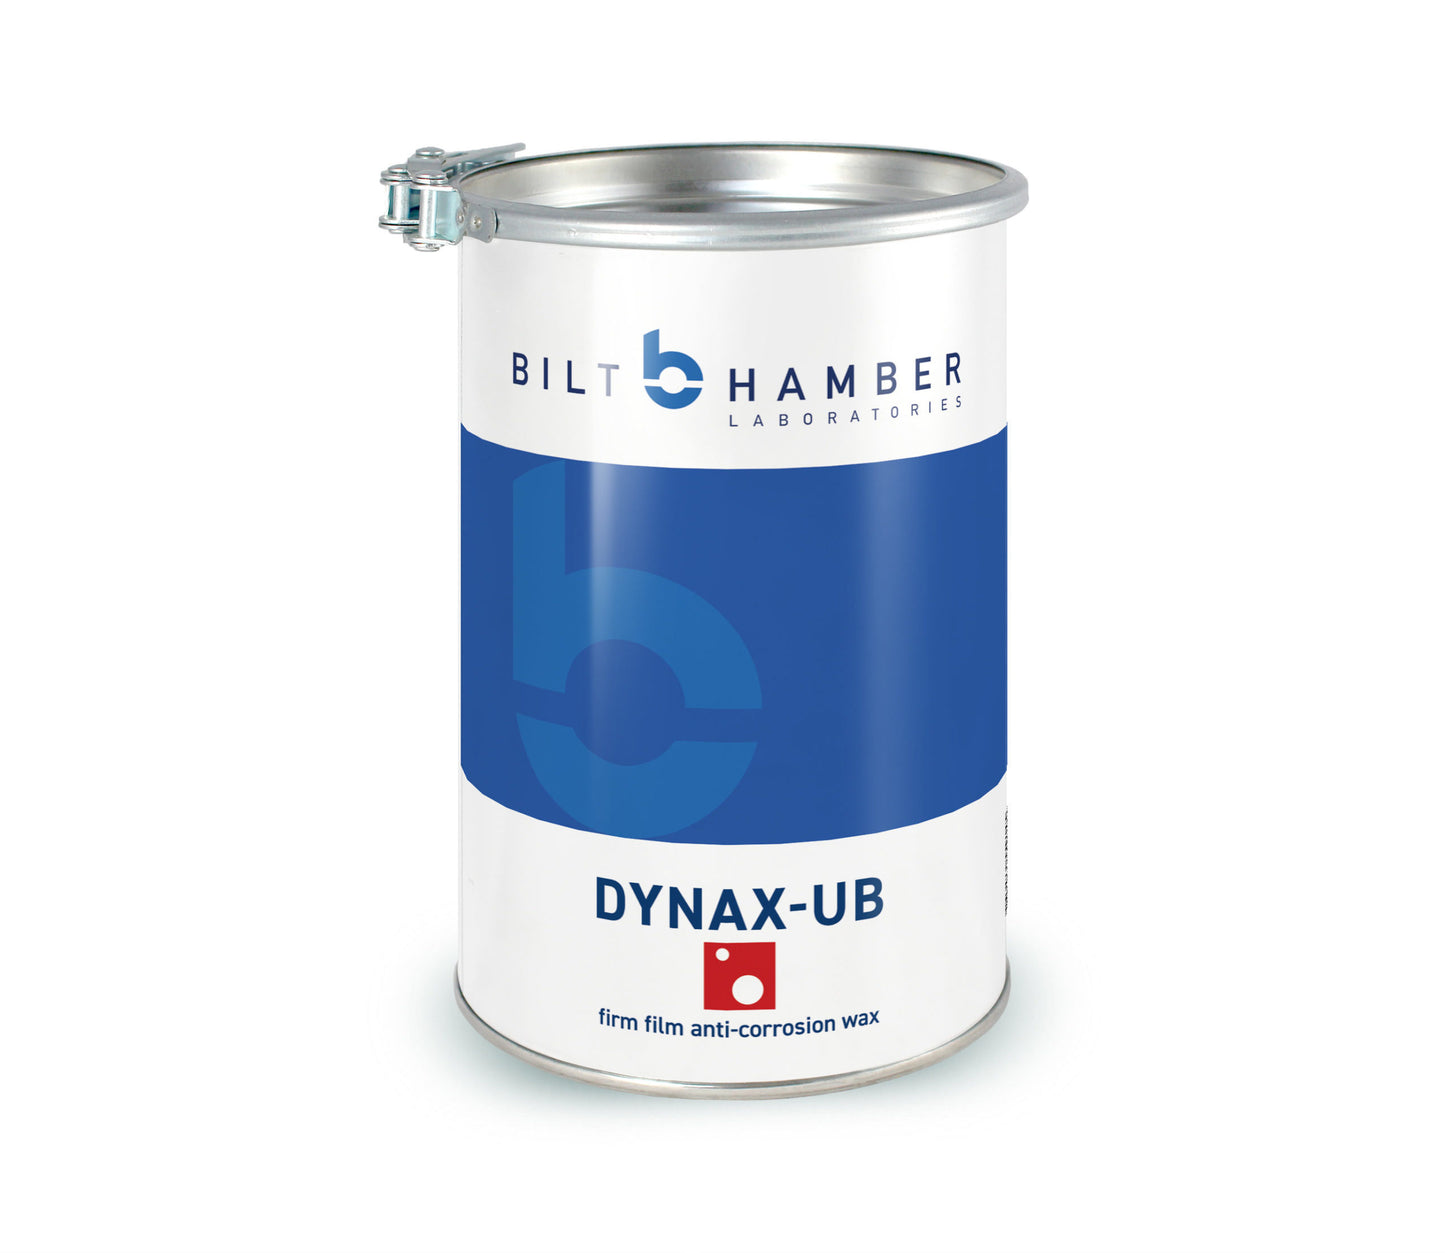 Dynax-UB is a high-performance anti-corrosion wax designed for car underbodies. Supplied with a 145mm application straw. Bilt Hamber Ireland